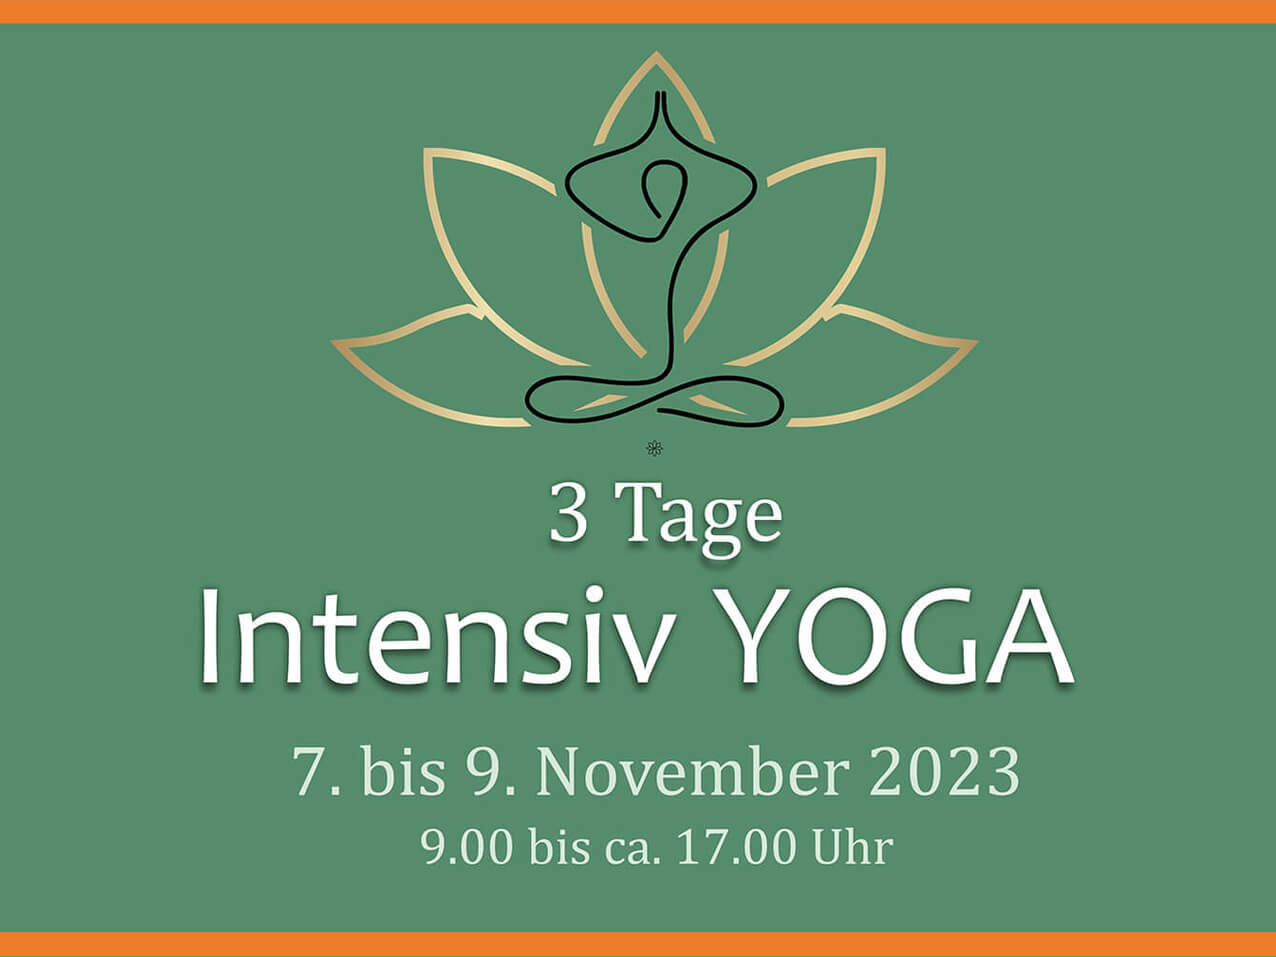 Intensiv Yoga-Physiotherapie Zobel-am Fernsehturm Dresden-Banner